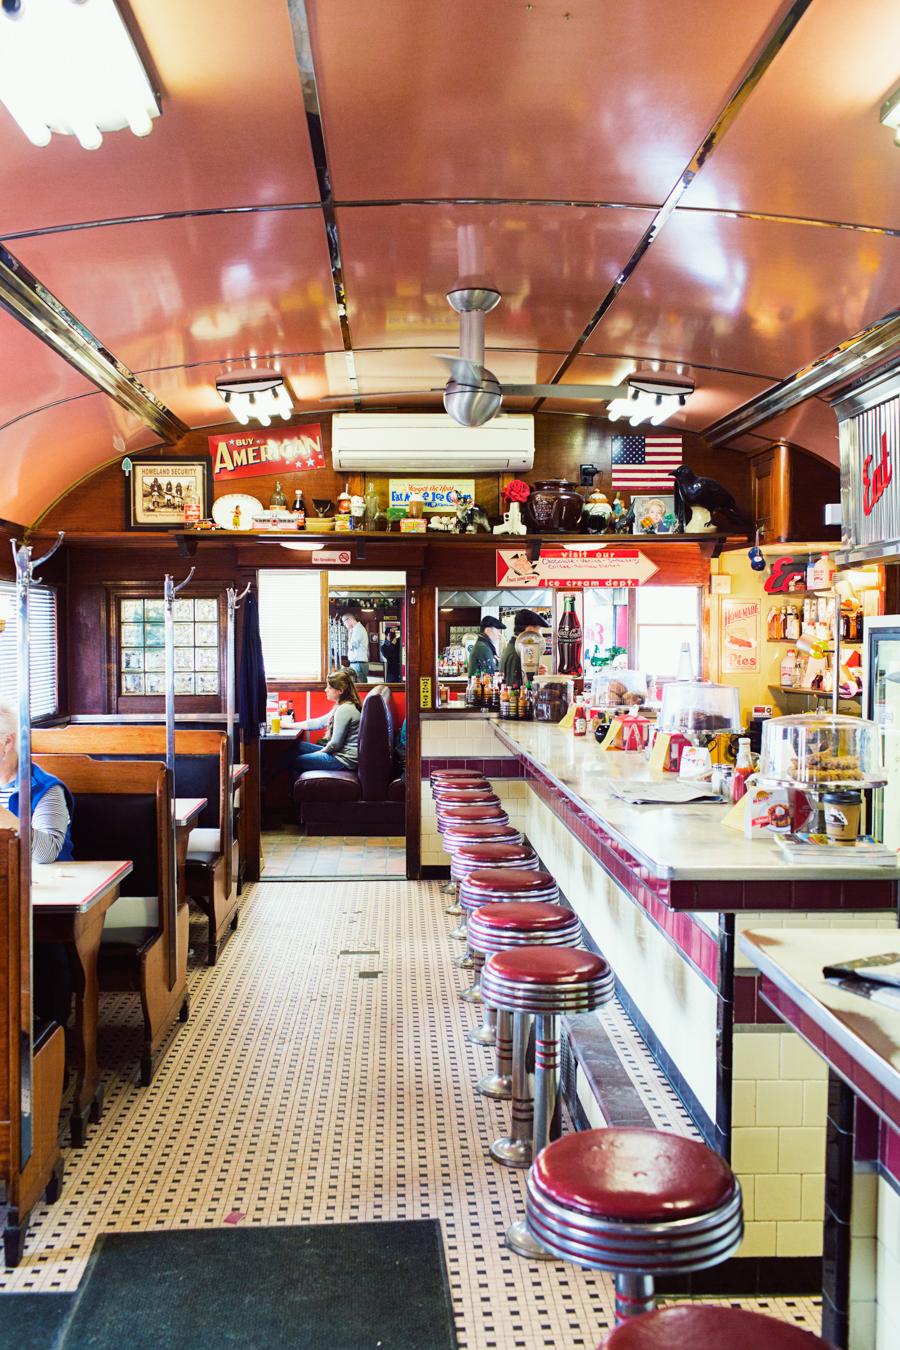 Inside the original diner car.